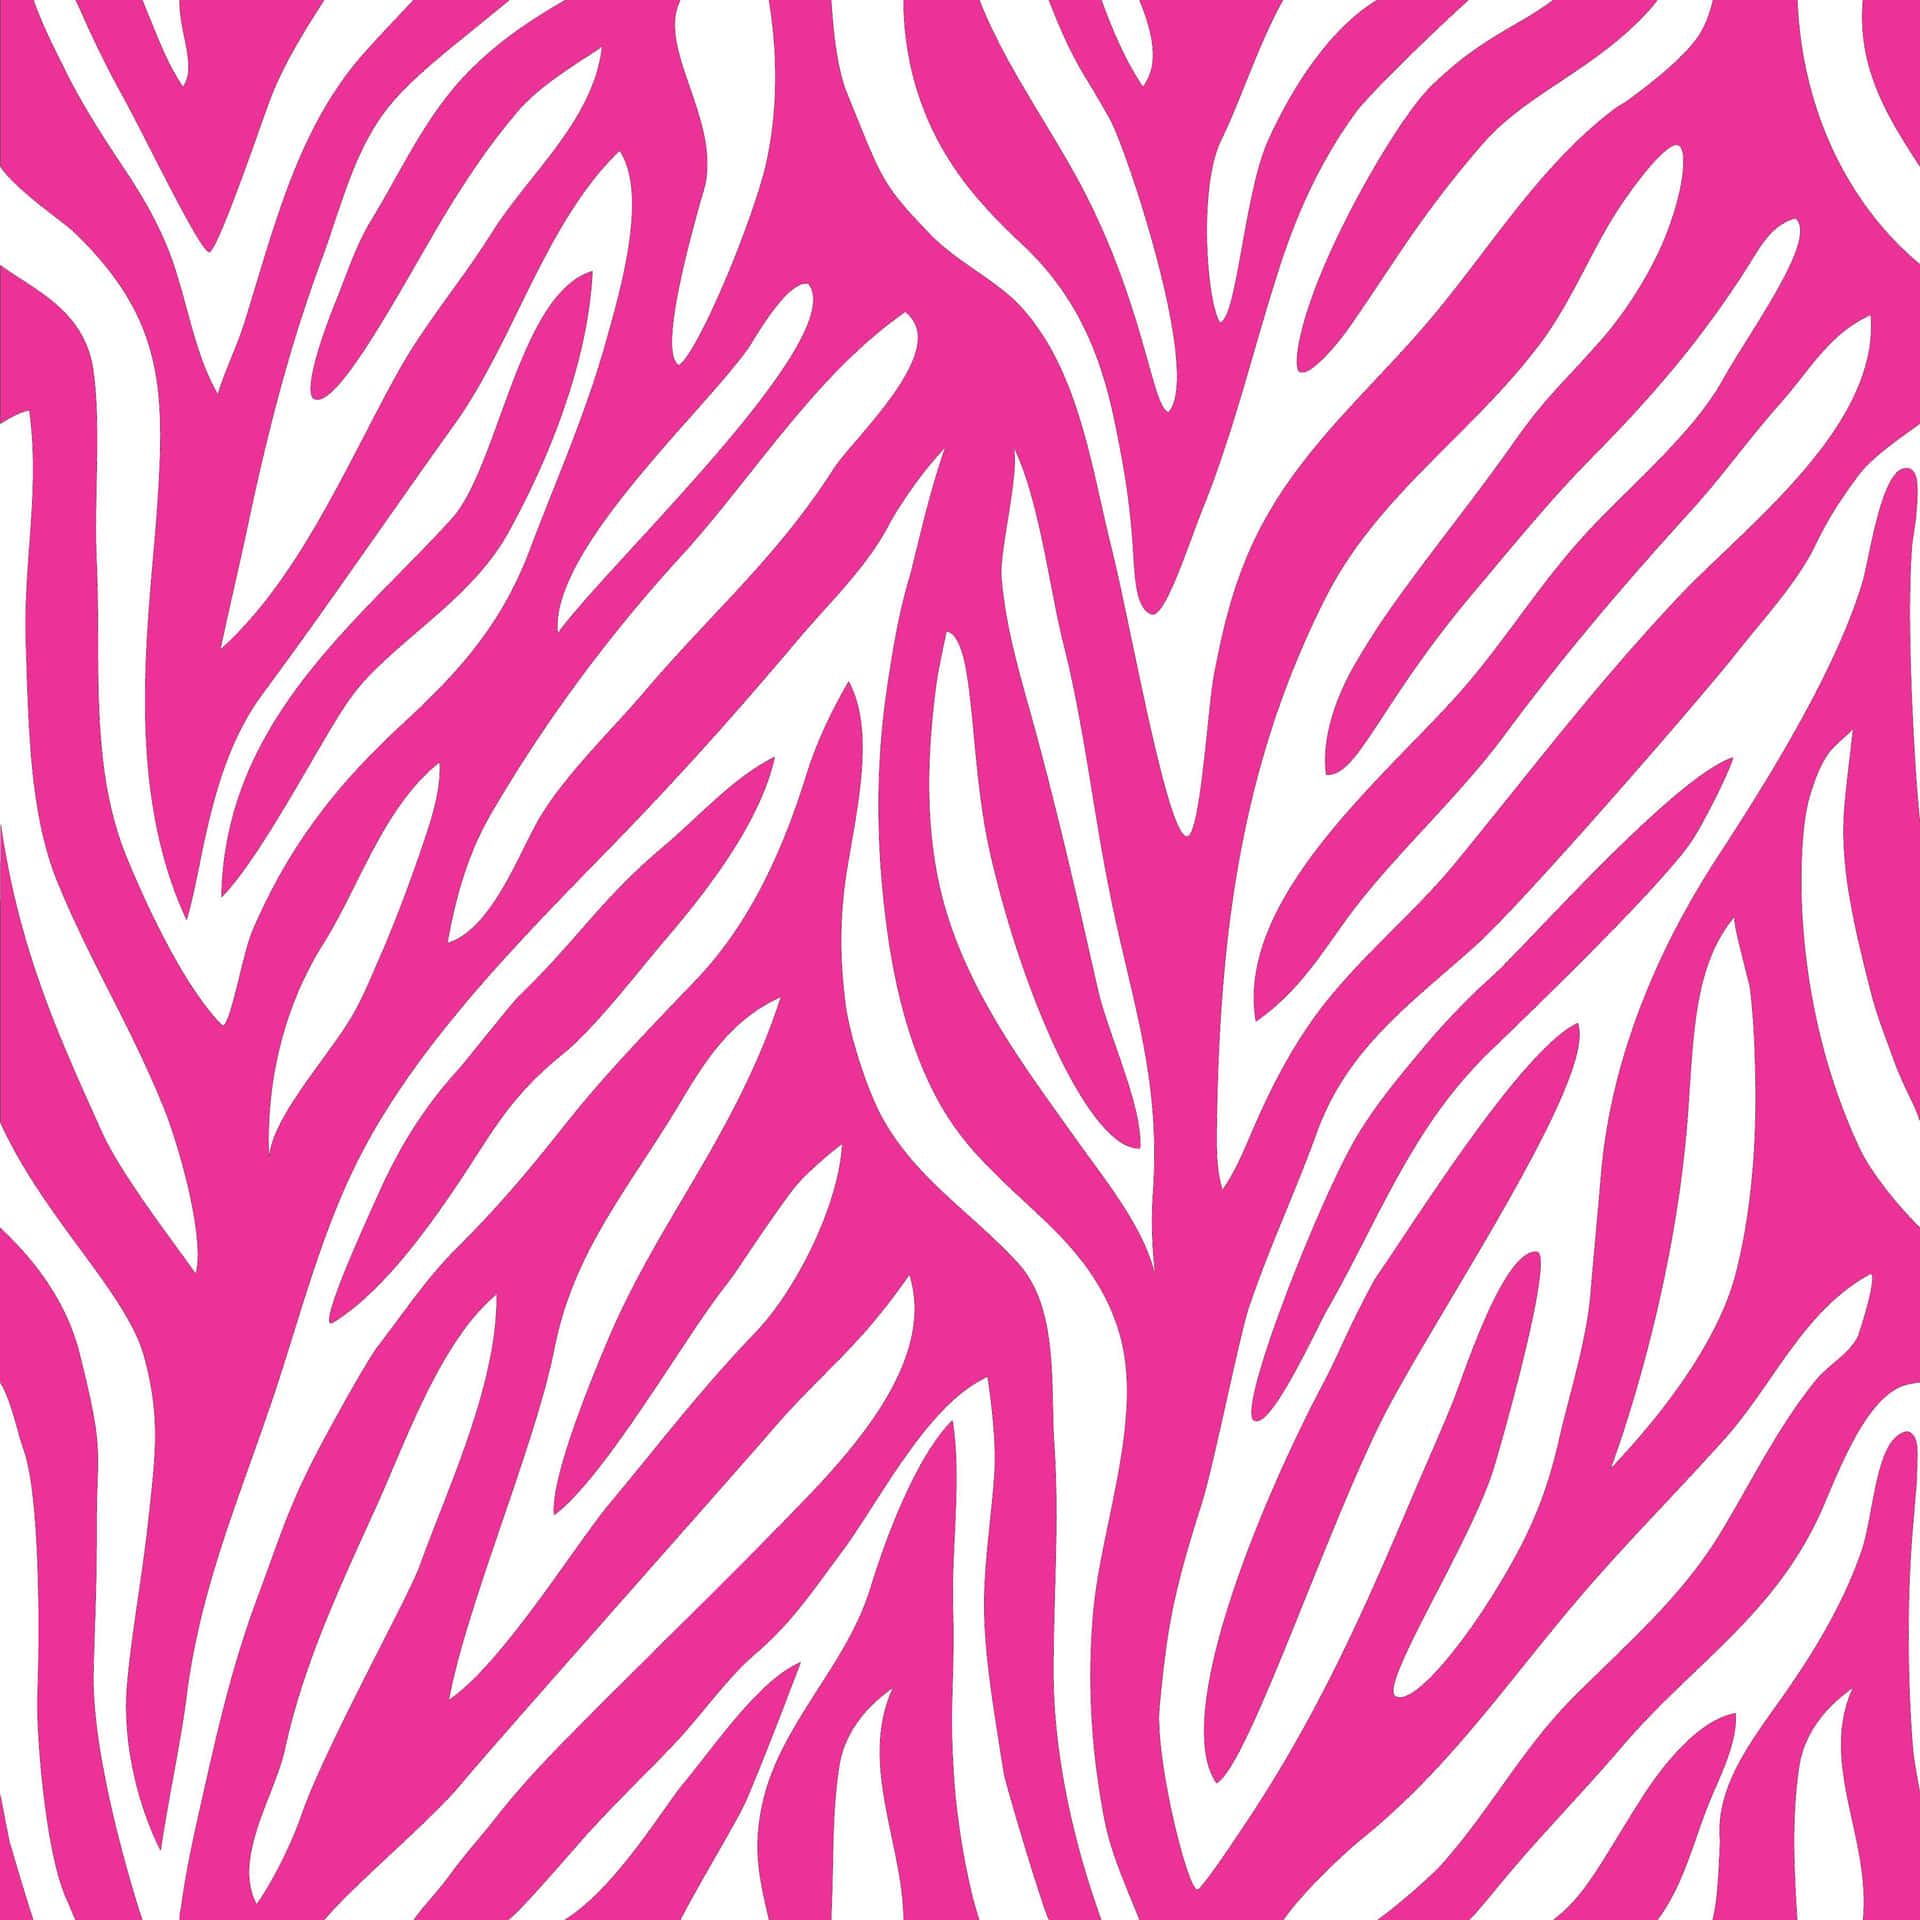 Animal Print Pink And White Wallpaper